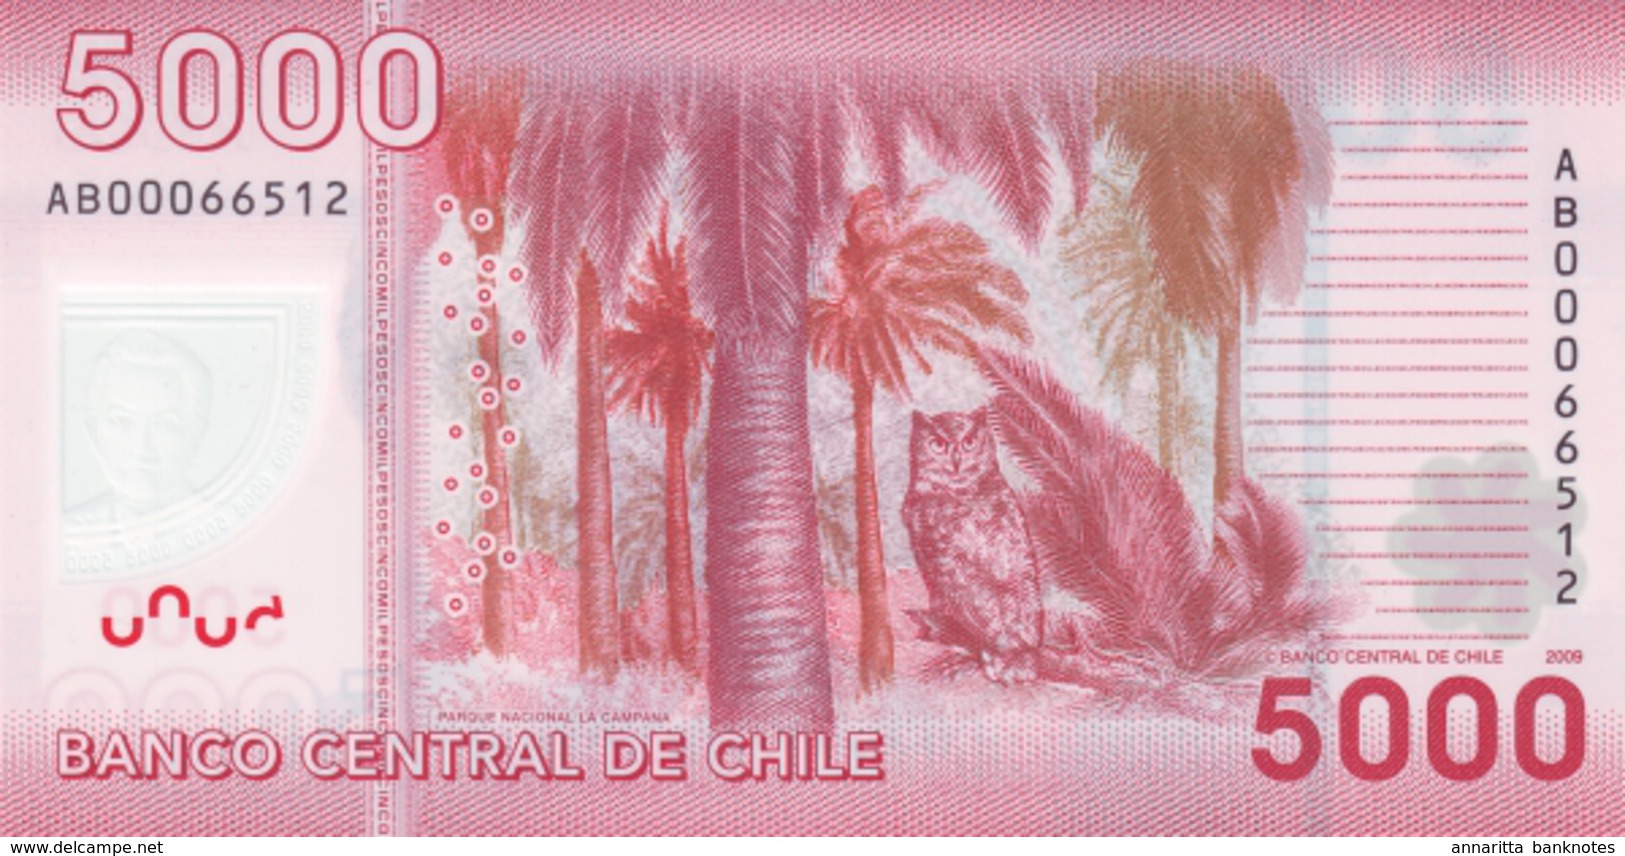 CHILE 5000 PESOS 2009 P-163a UNC [CL298a] - Chile